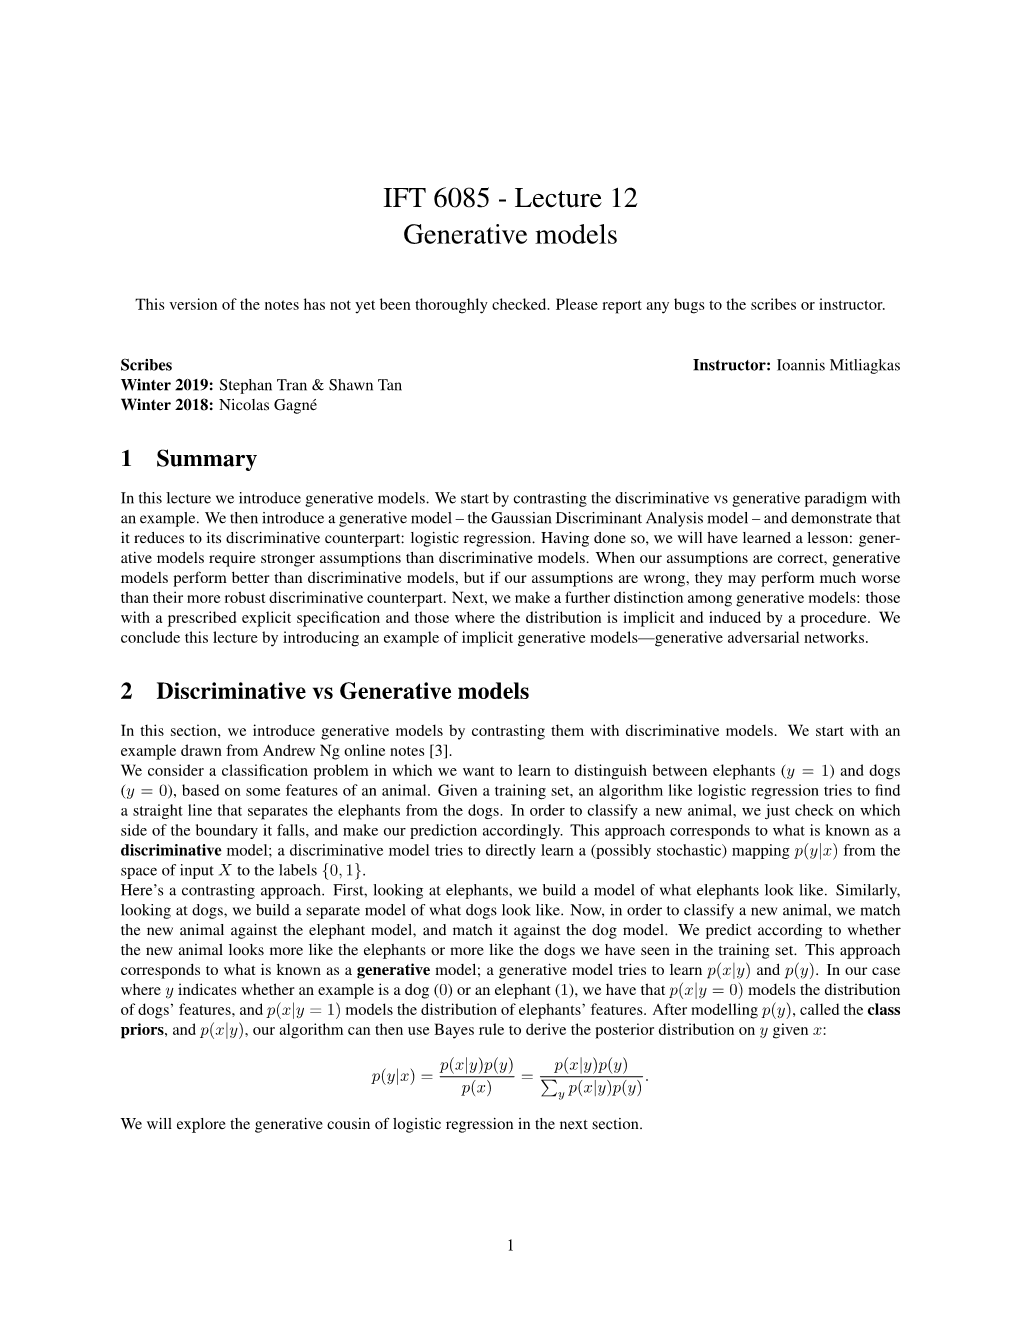 IFT 6085 - Lecture 12 Generative Models